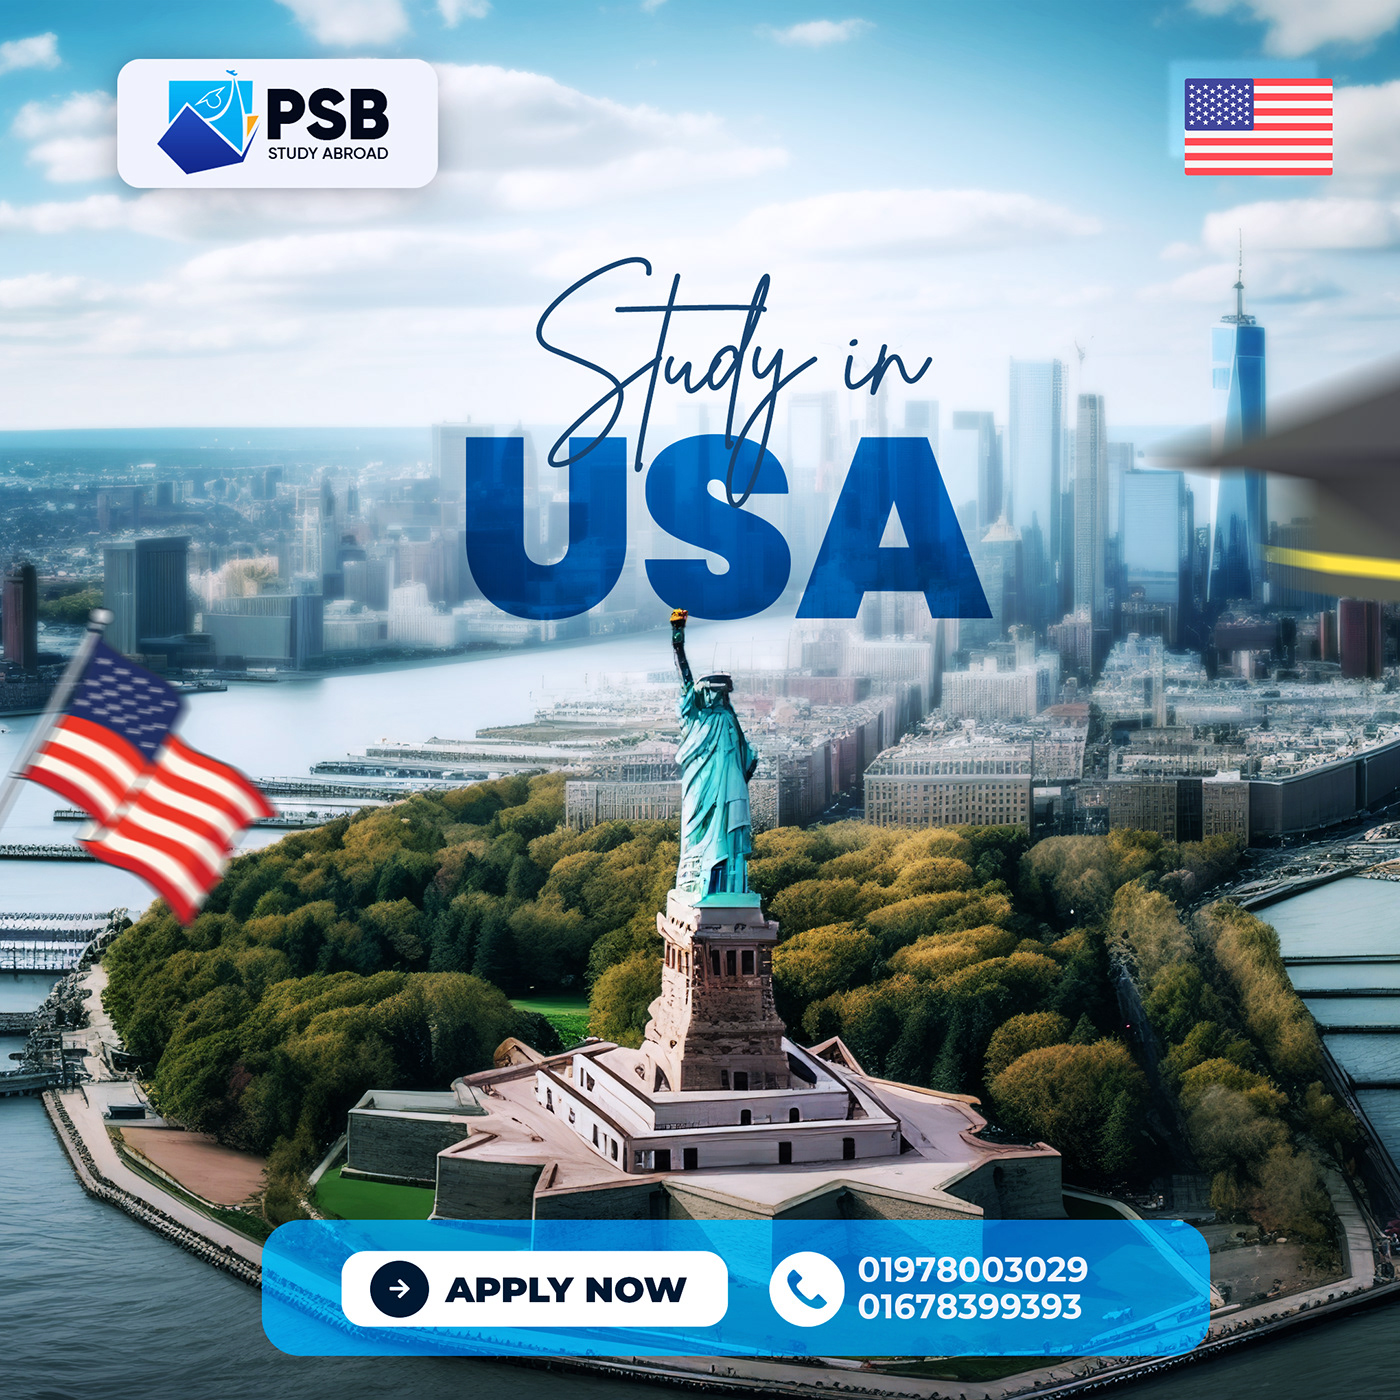 PSB Study Abroad - Study in USA - Minimal Social Media Post Design 